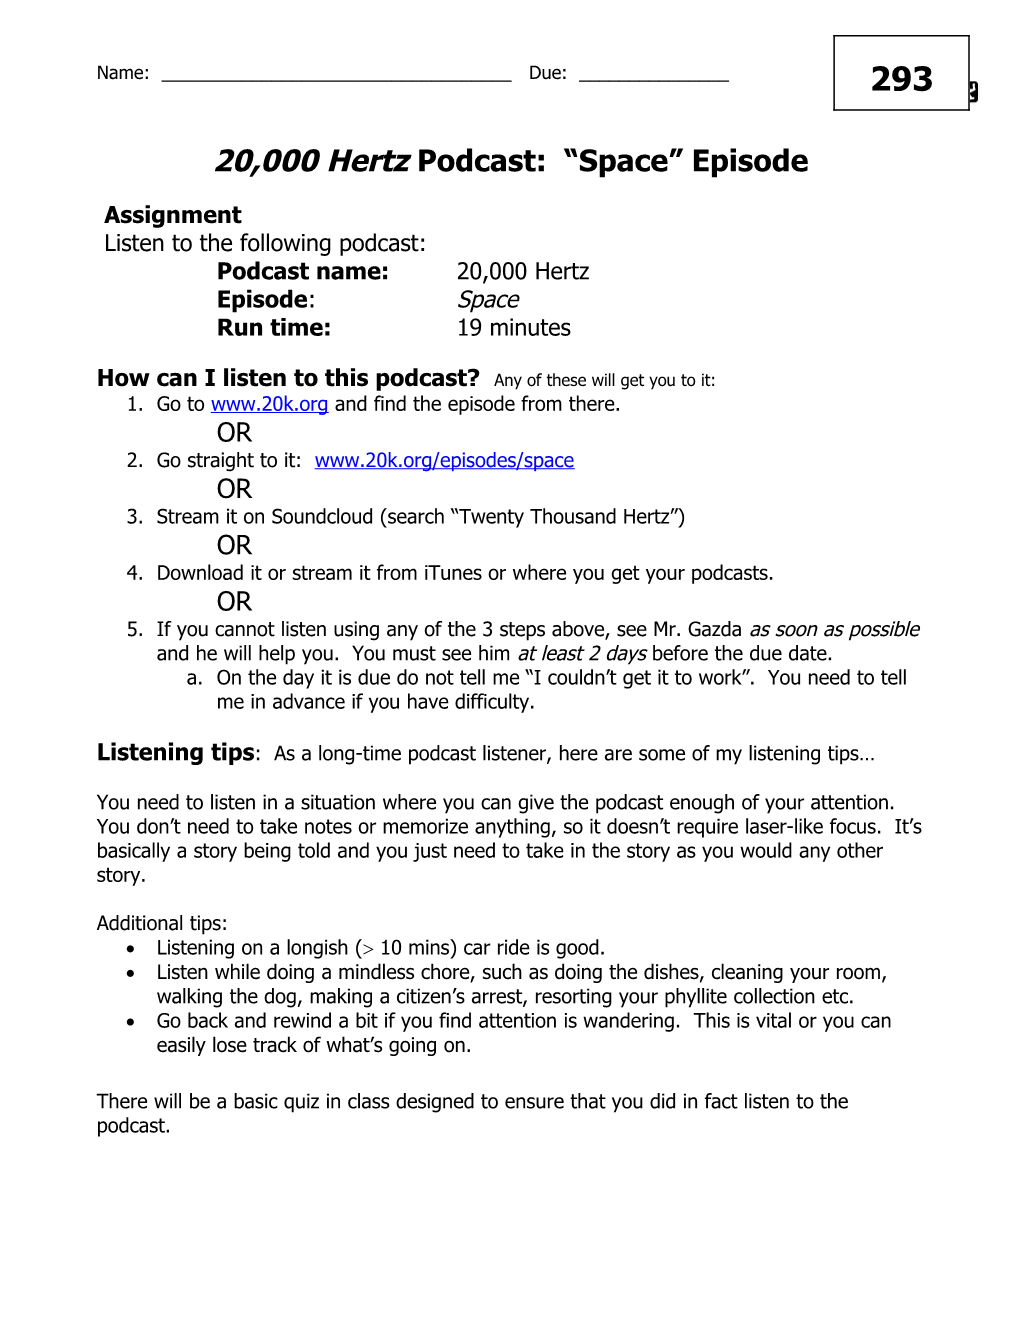 20,000 Hertz Podcast: Space Episode